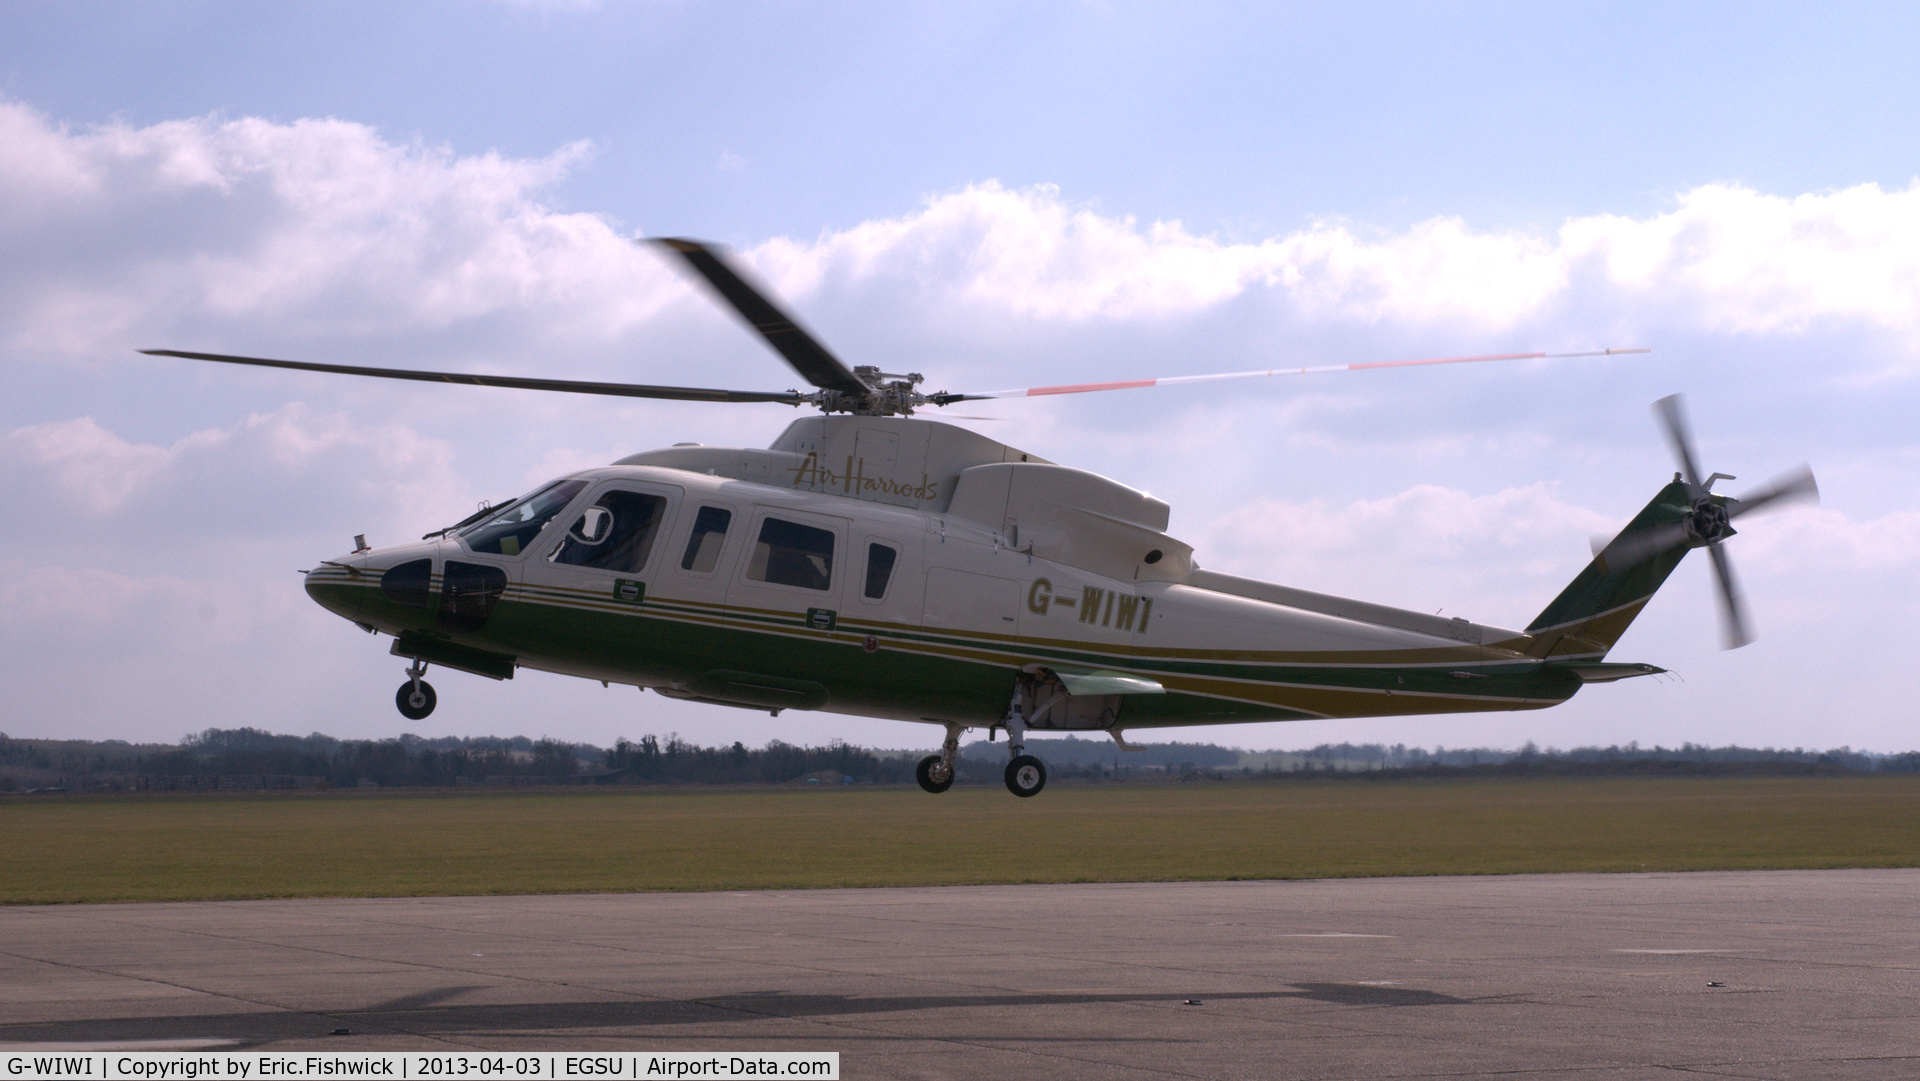 G-WIWI, 2007 Sikorsky S-76C C/N 760684, 3. G-WIWI at IWM, Duxford.